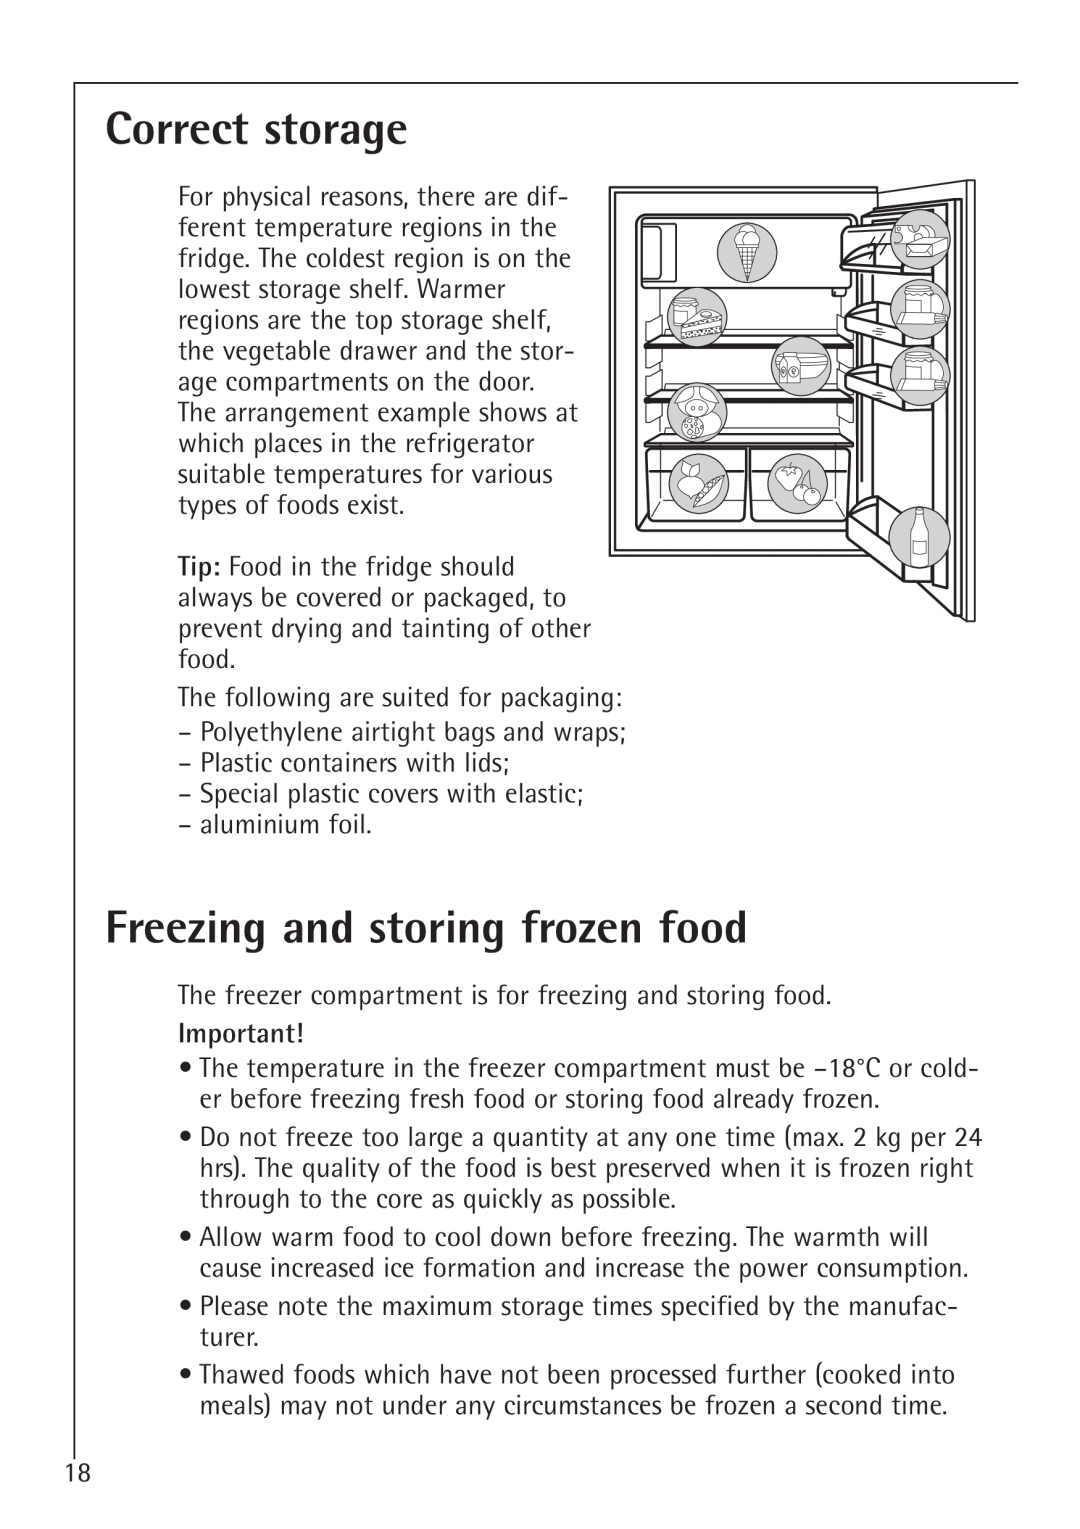 Electrolux 1583-8 TK operating instructions Correct storage, Freezing and storing frozen food 